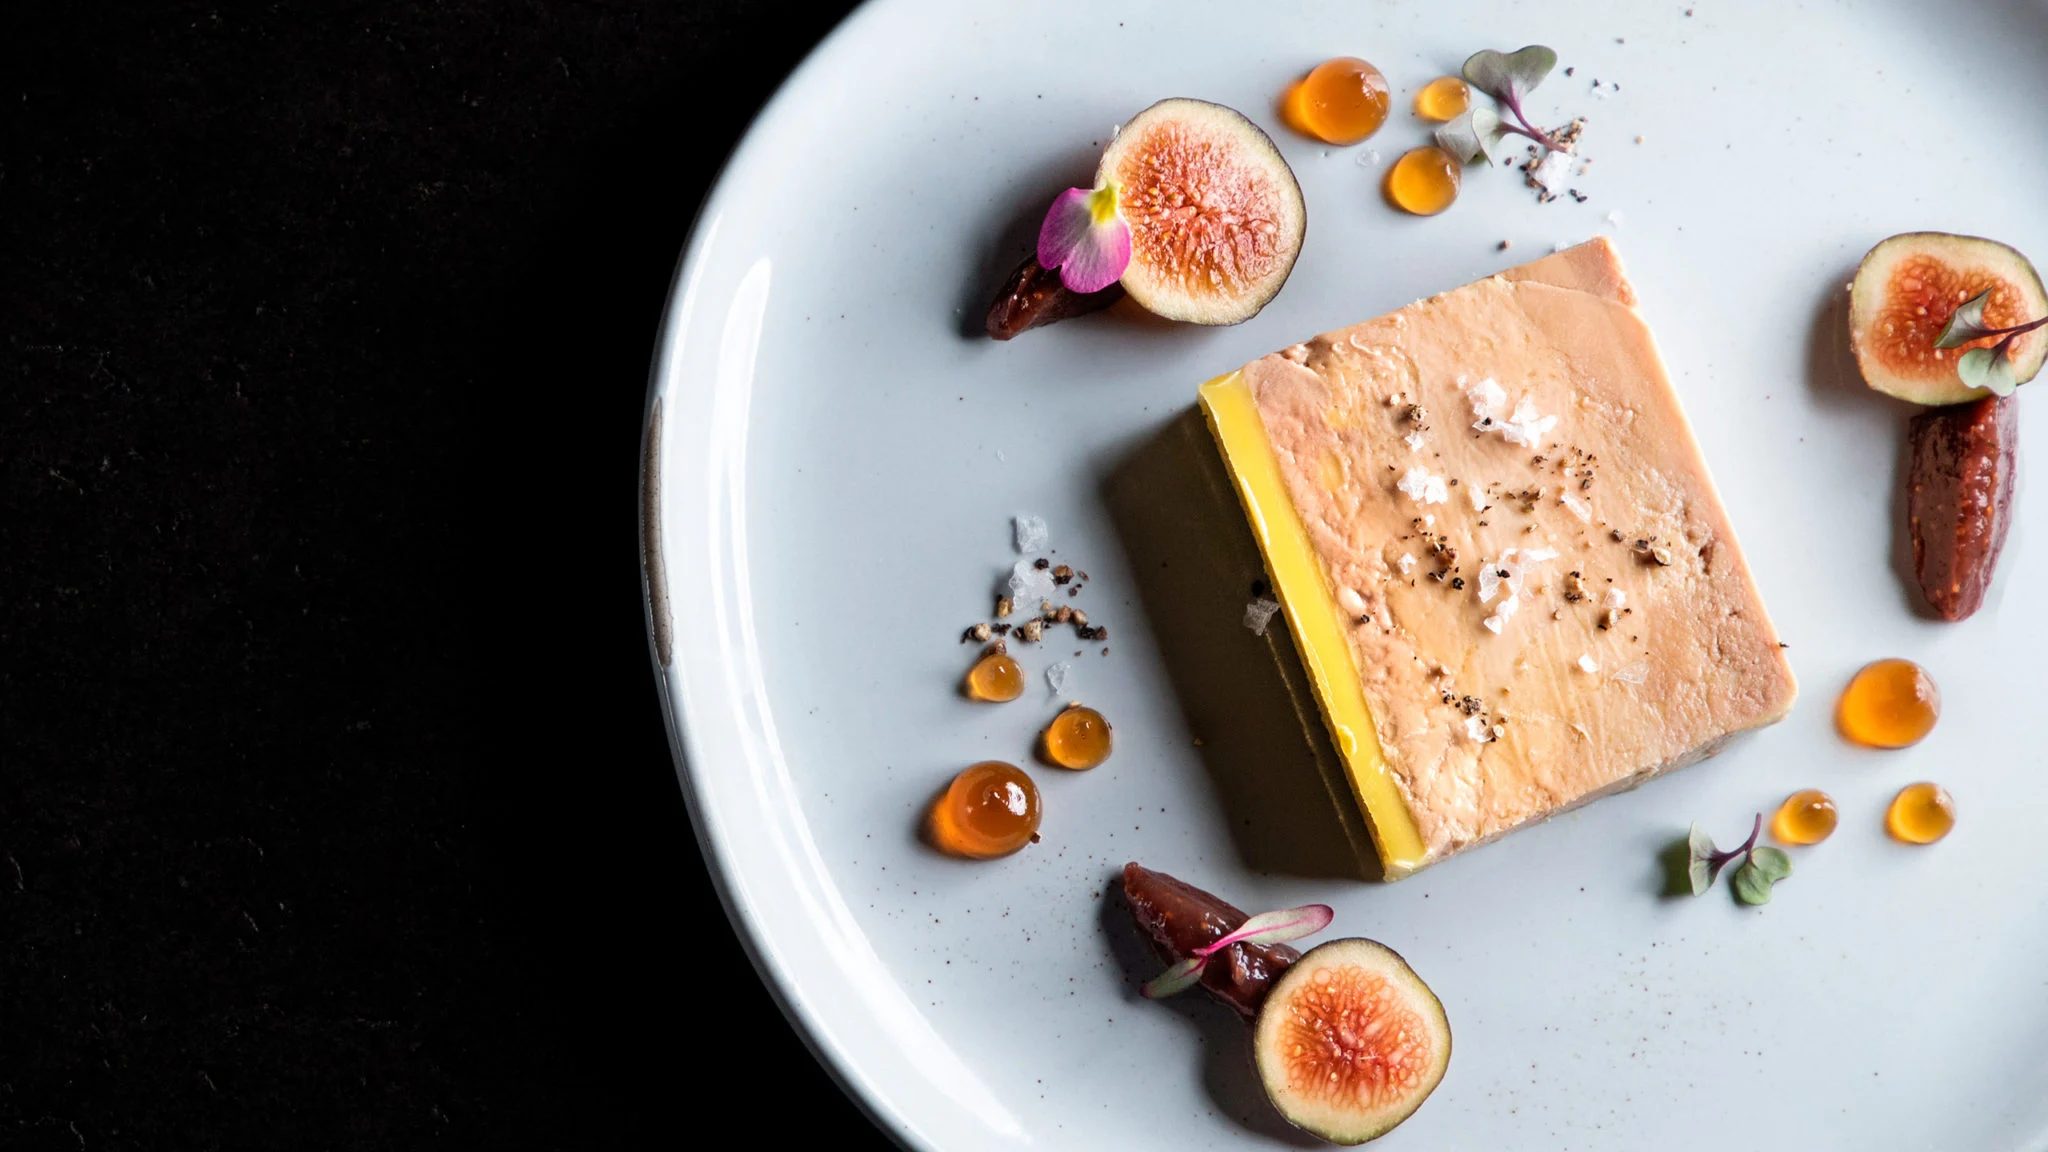 Restaurantes que nos inspiran a experimentar con el foie gras